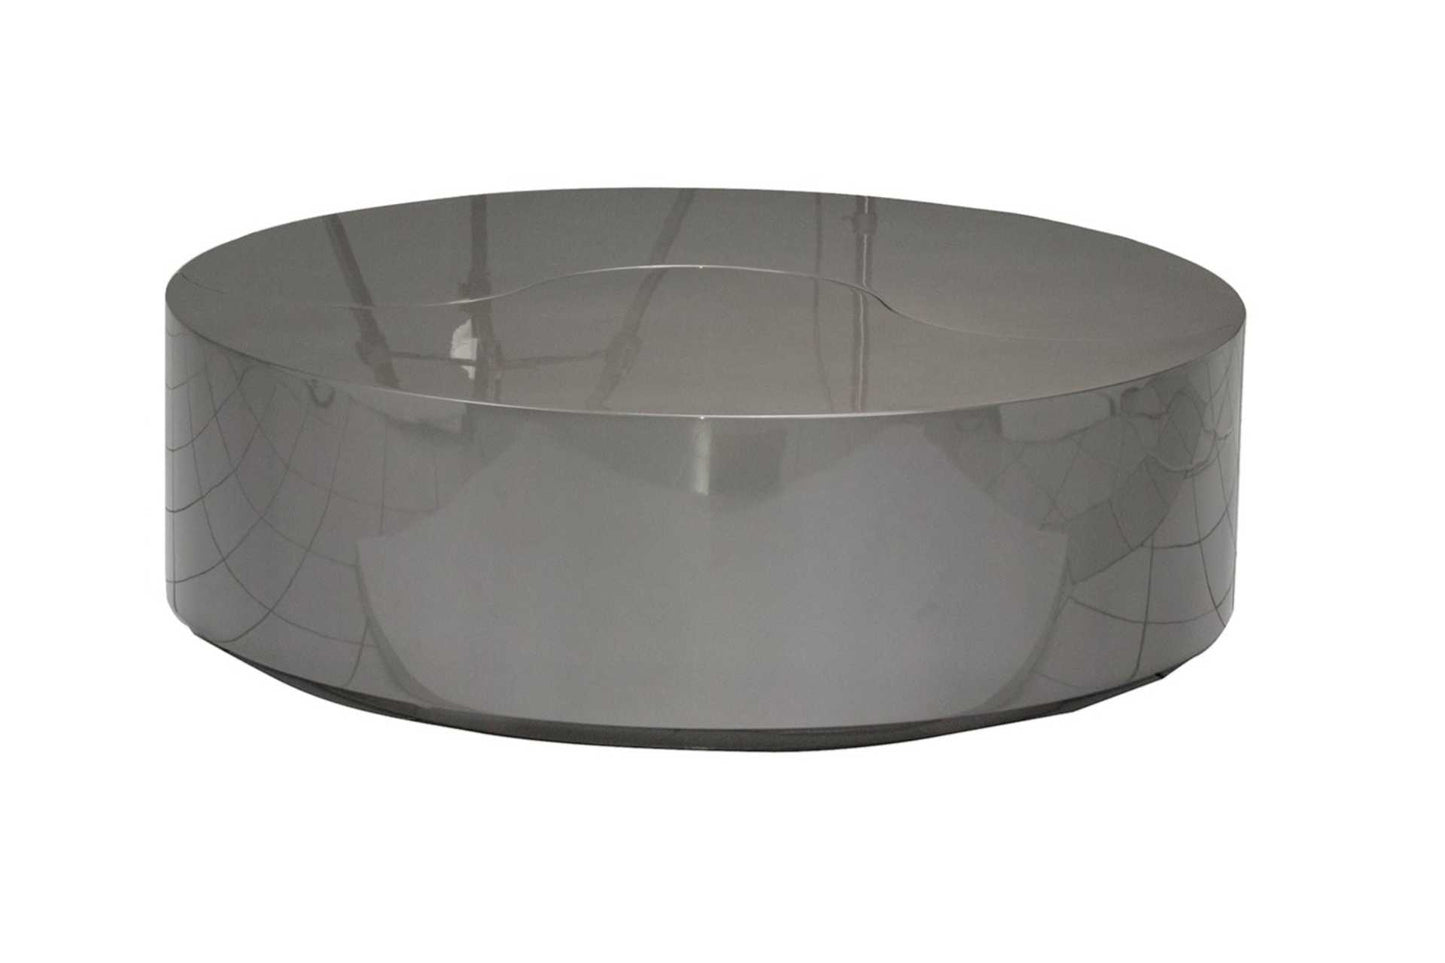 Round coffee table in dark gloss grey finish